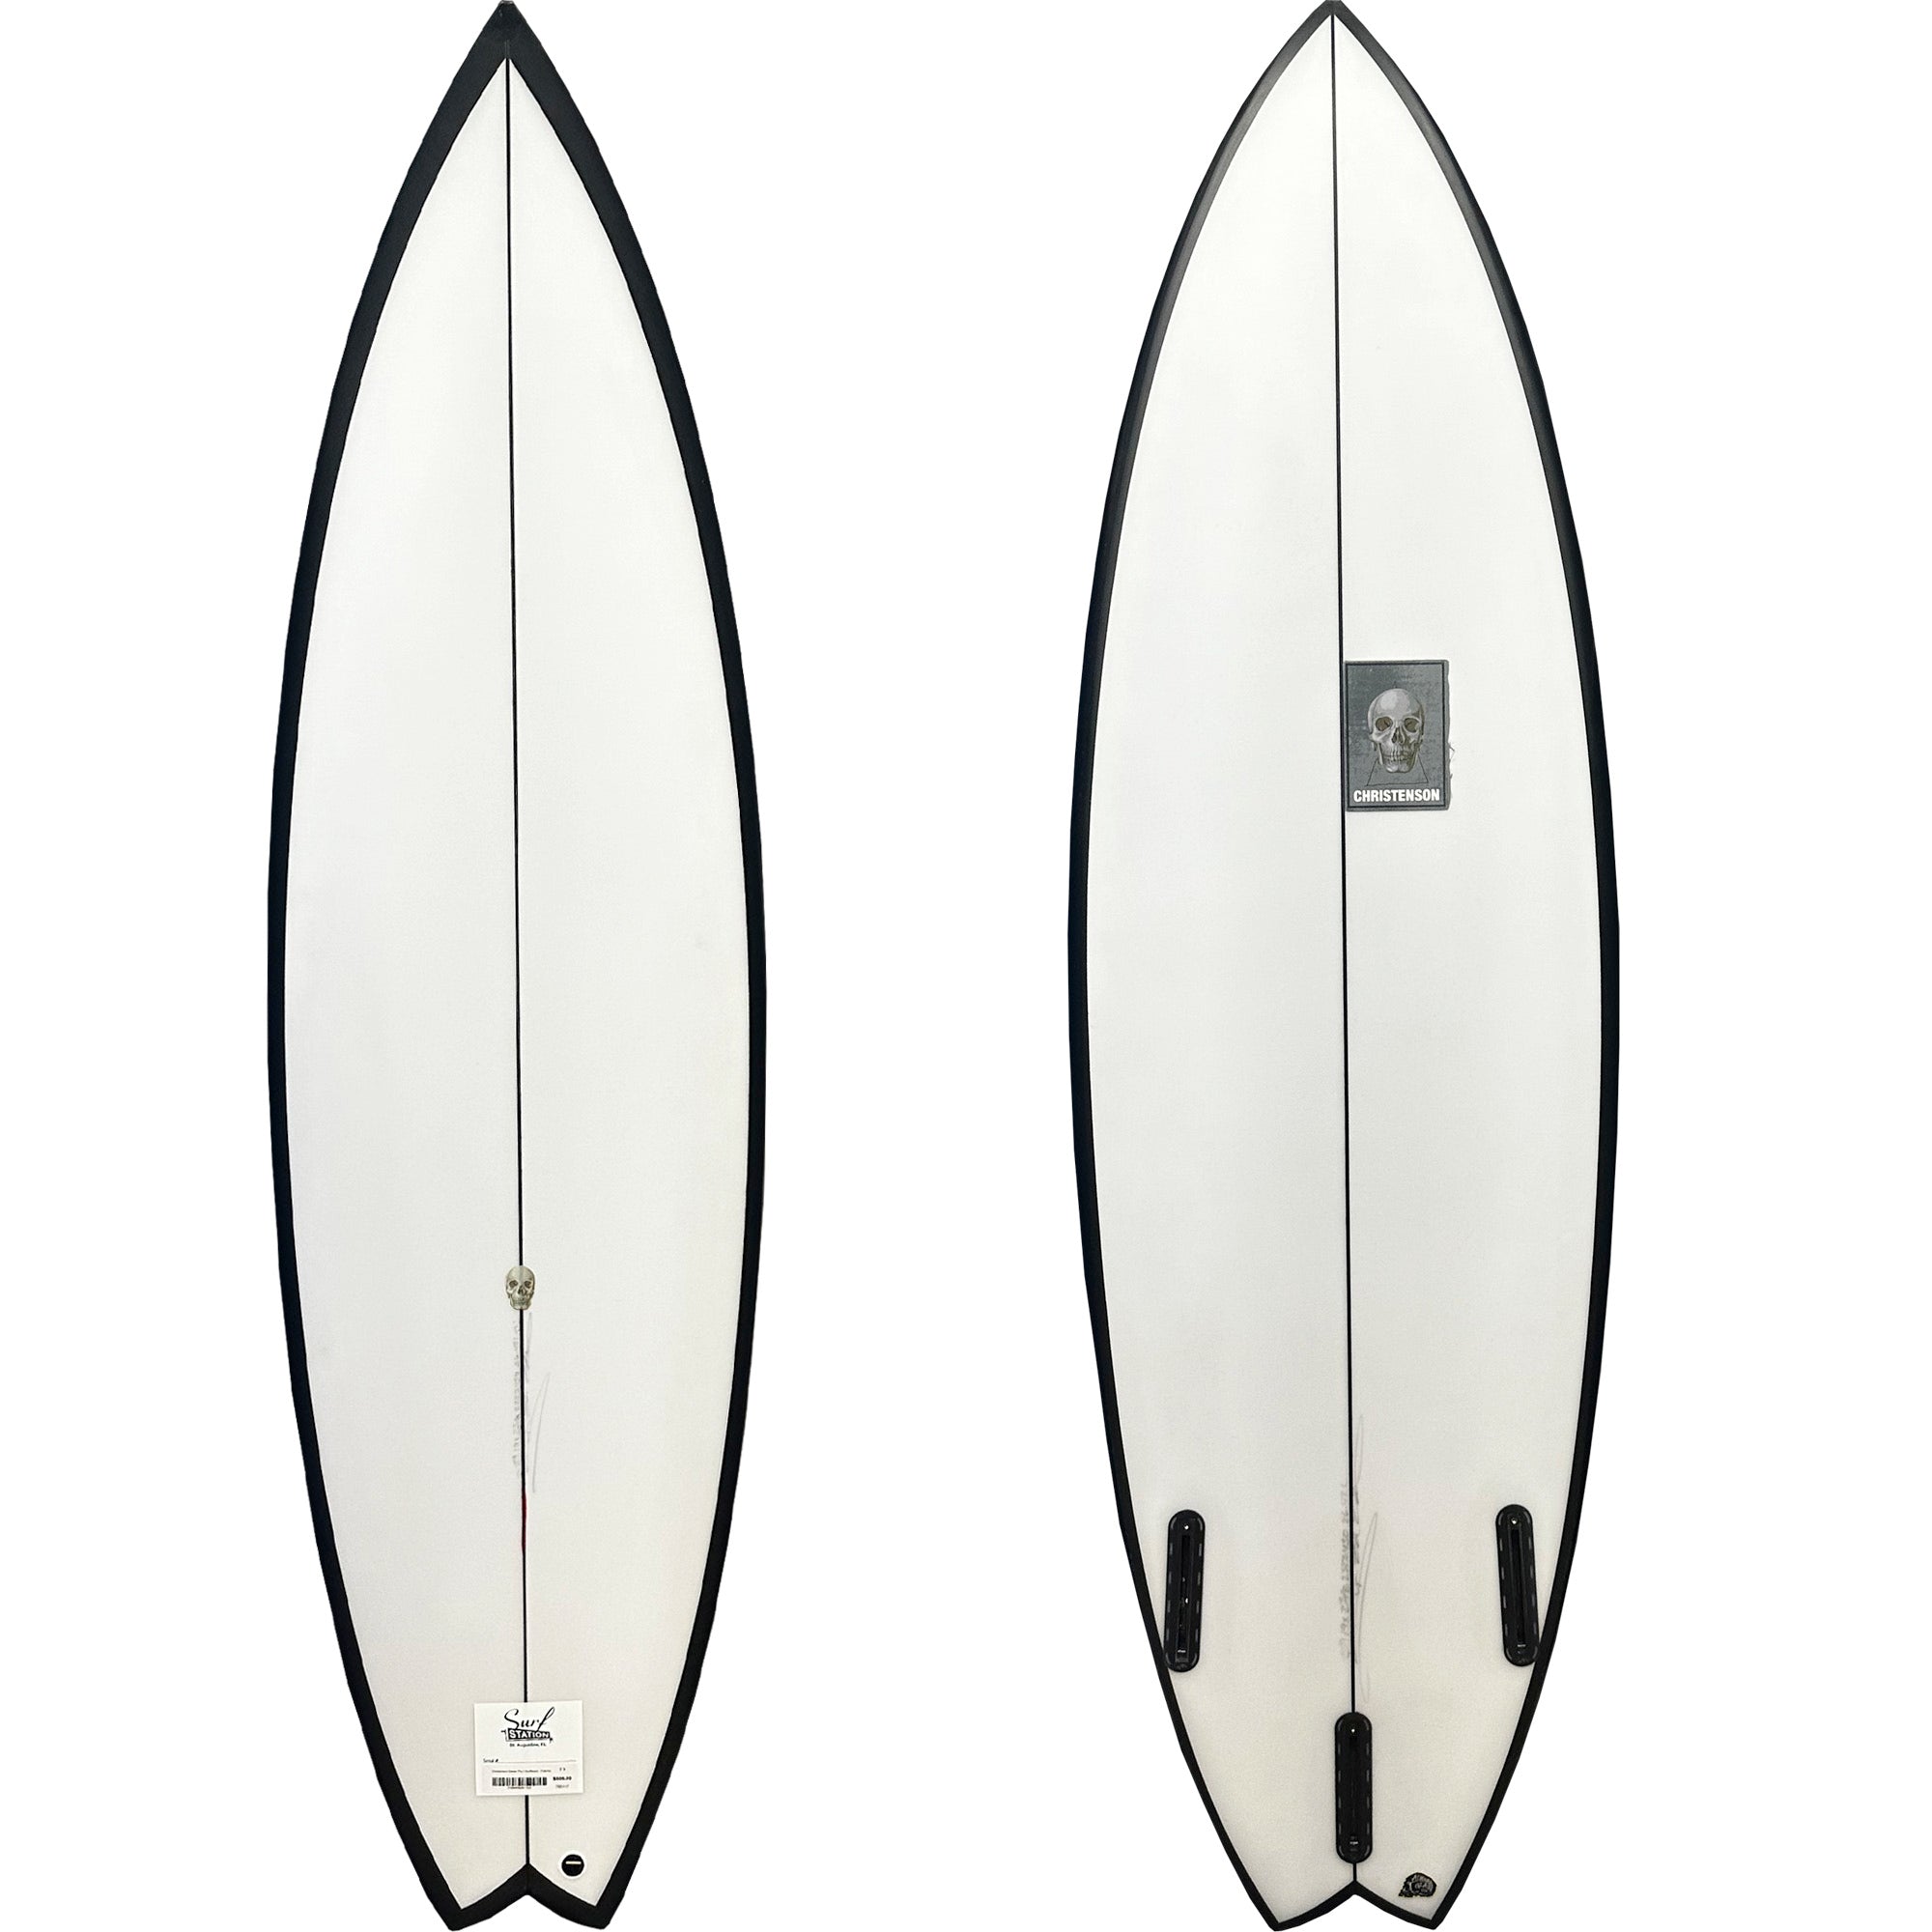 Christenson Ocean Pro 3 Surfboard - Futures